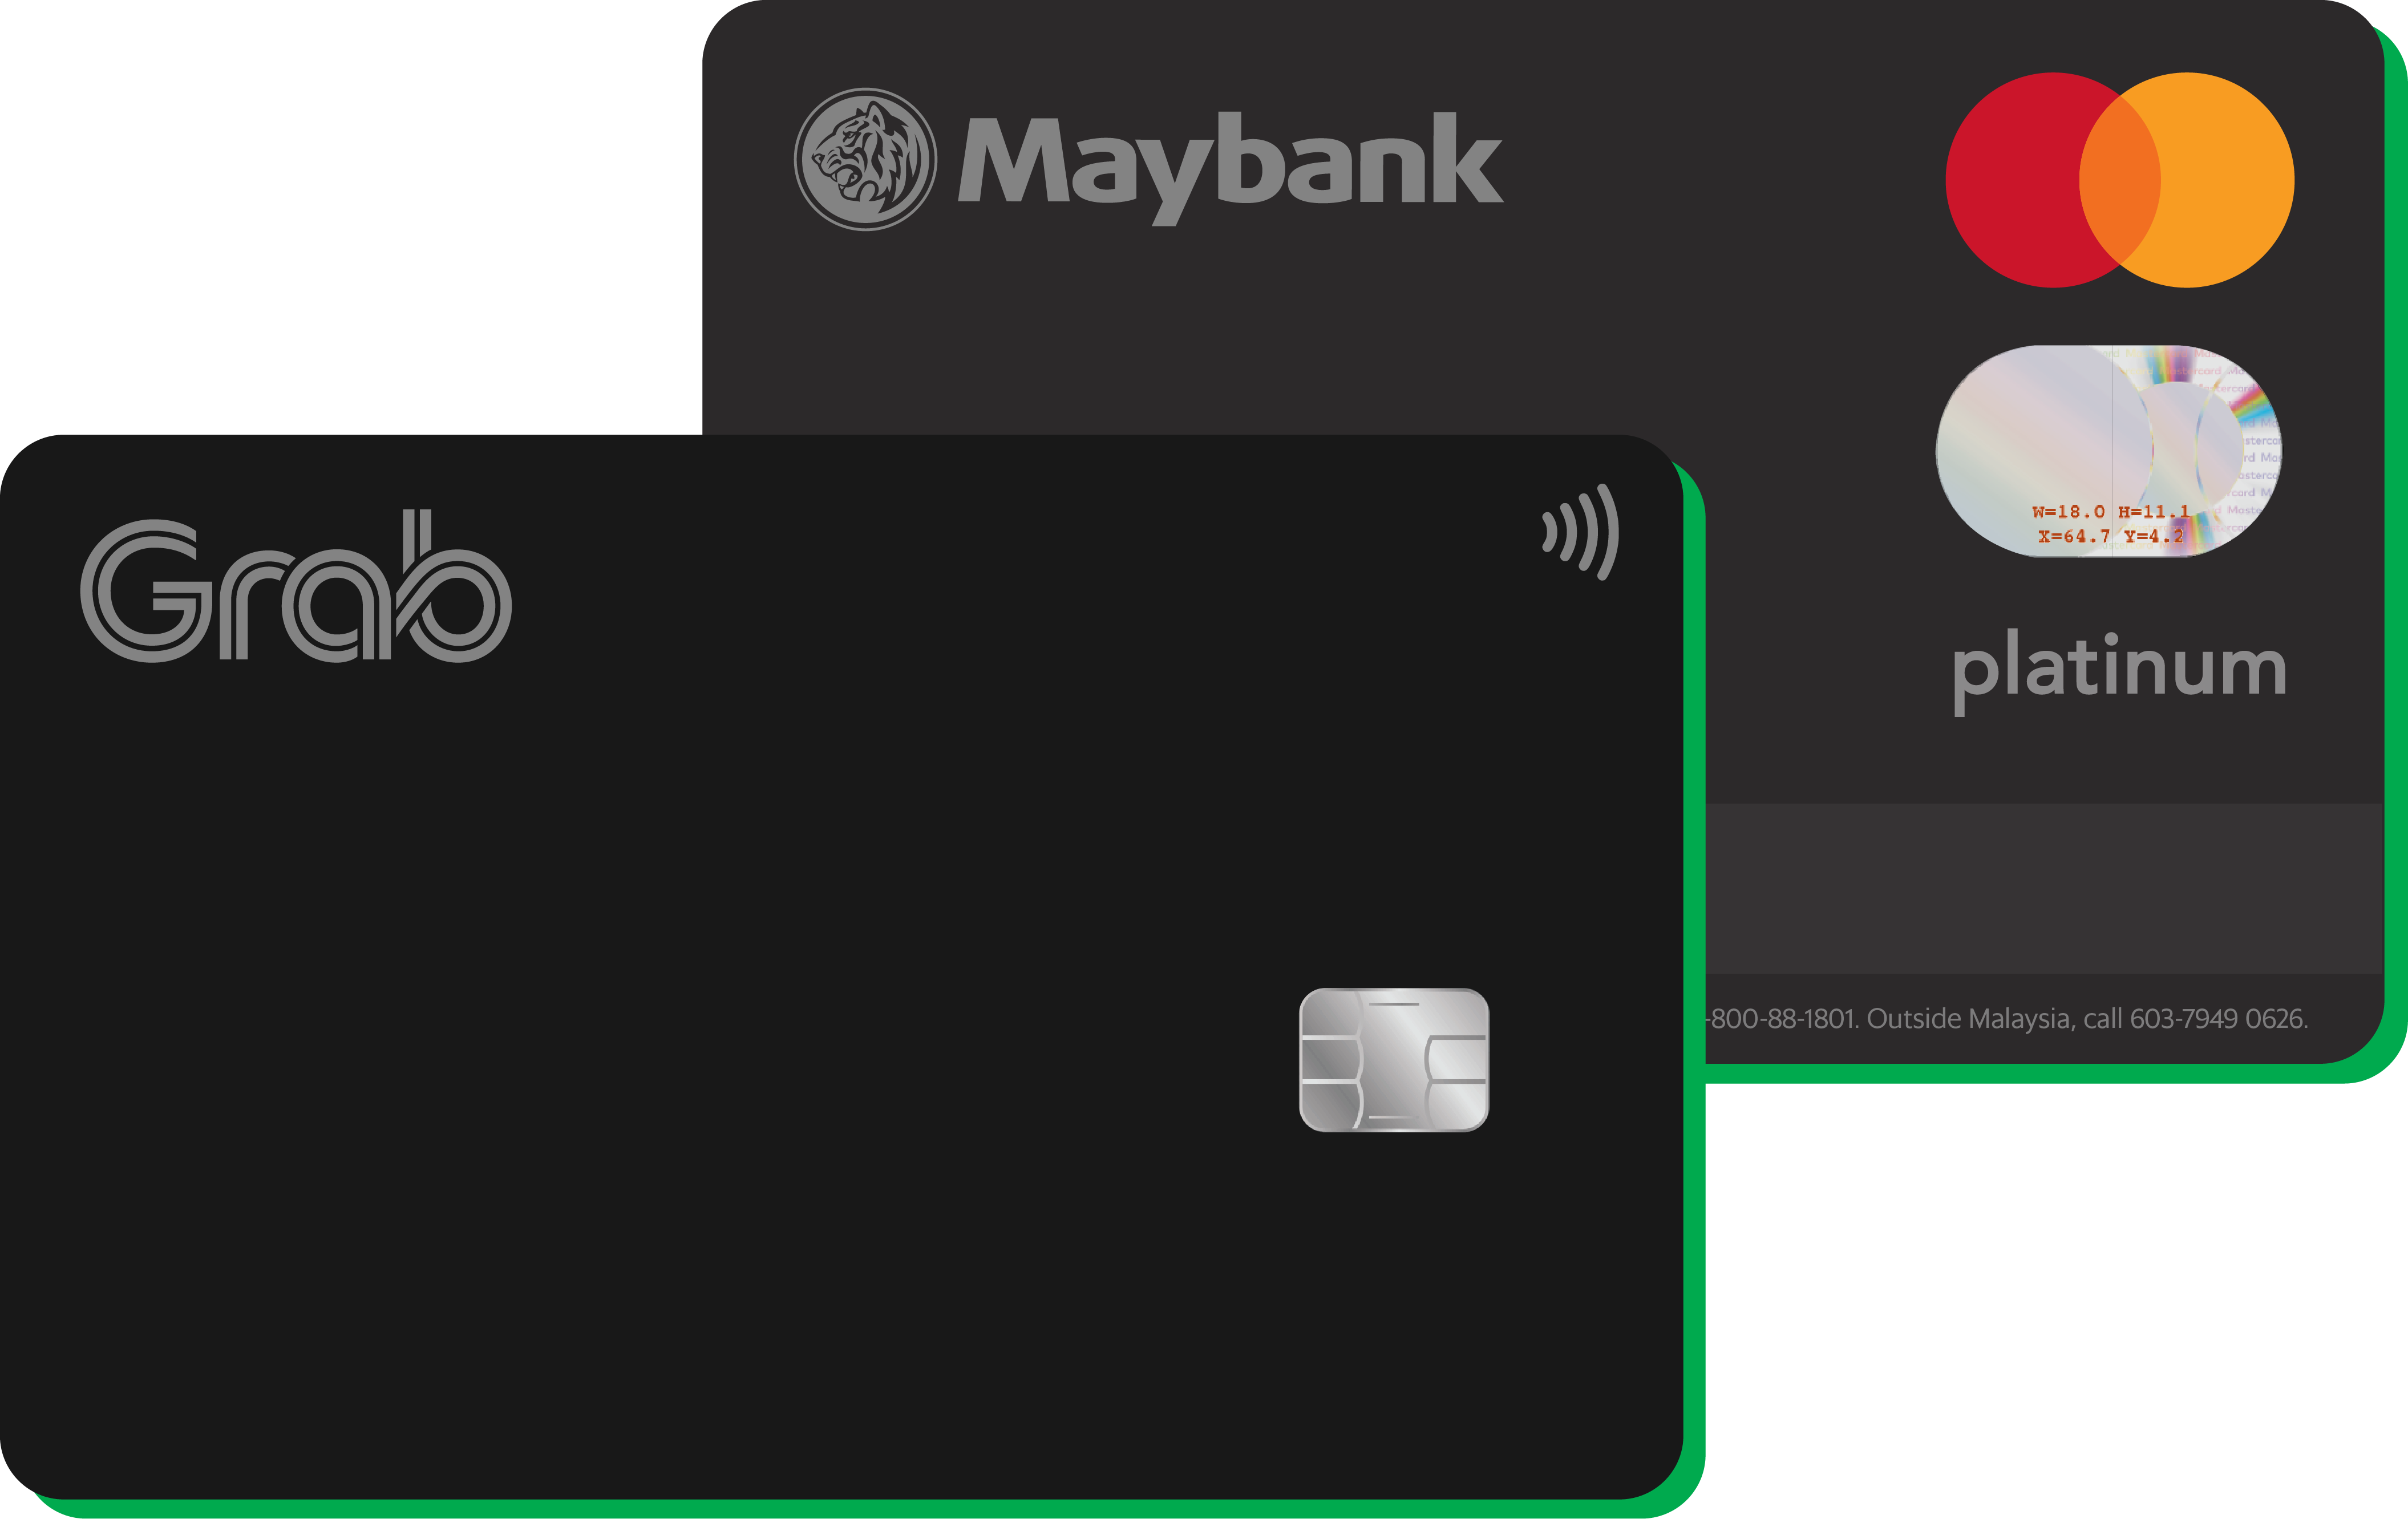 Maybank Grab Mastercard Platinum Credit Card (Black)